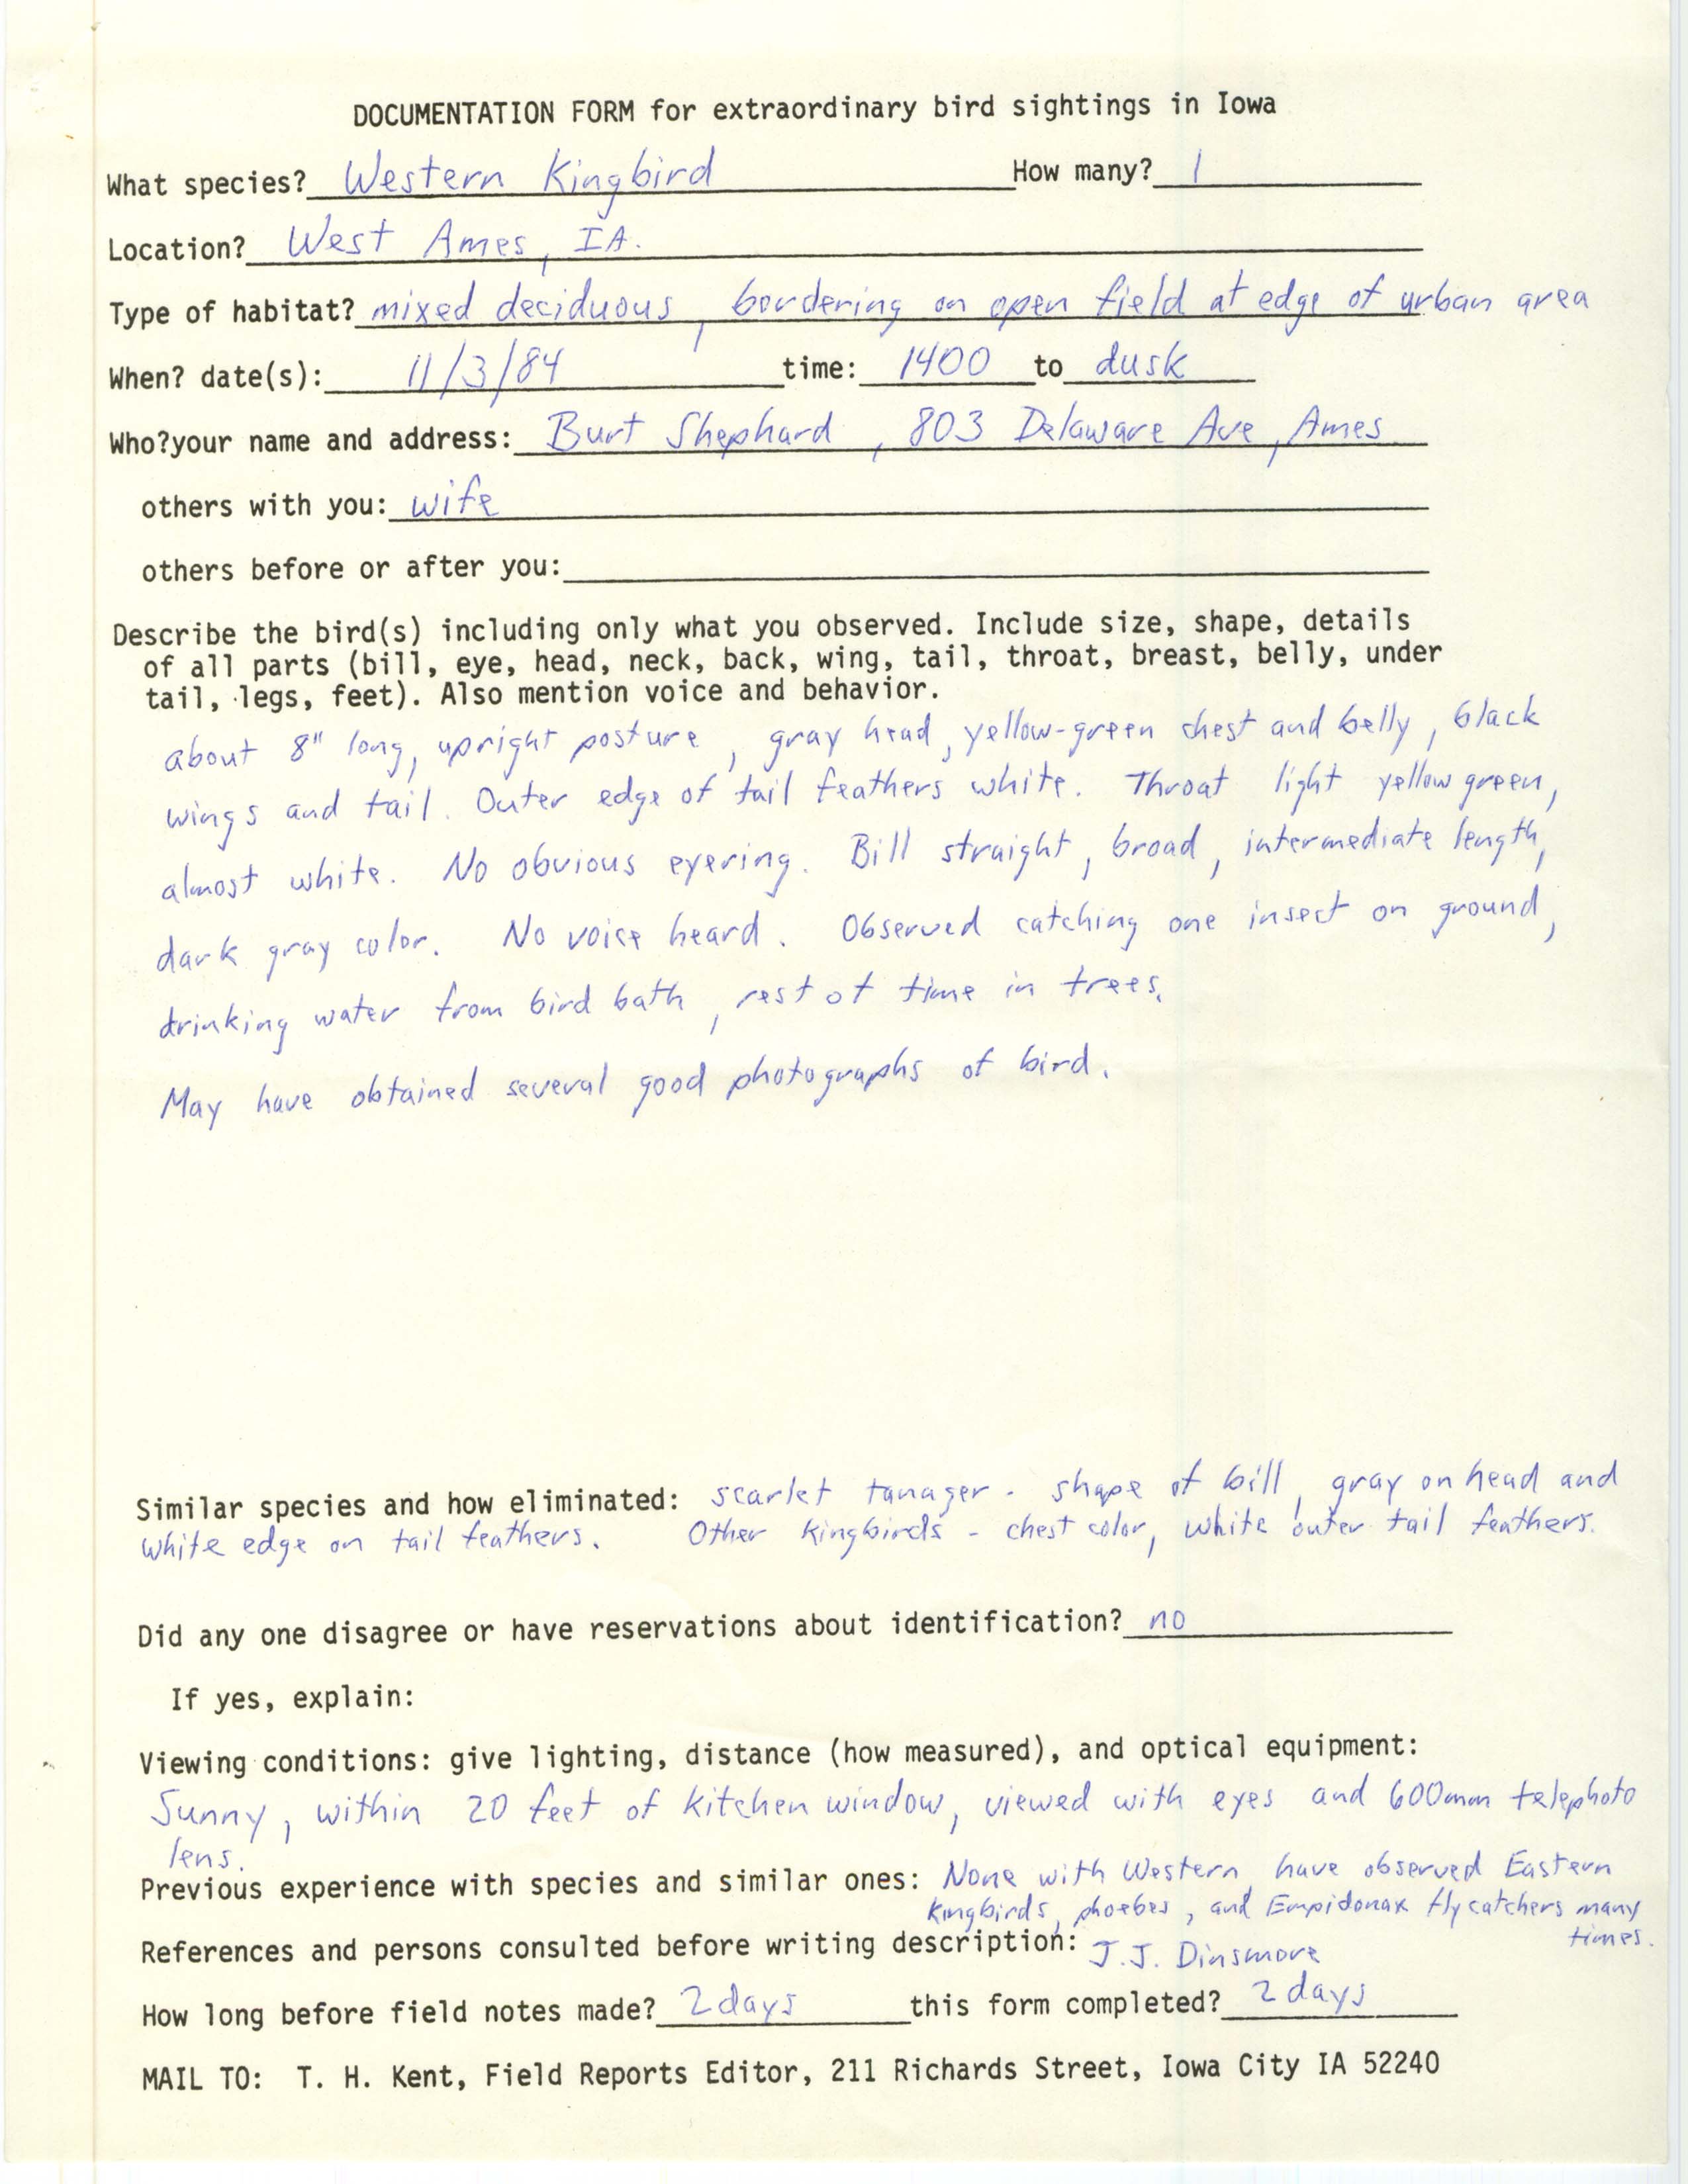 Rare bird documentation form for Western Kingbird at West Ames, 1984